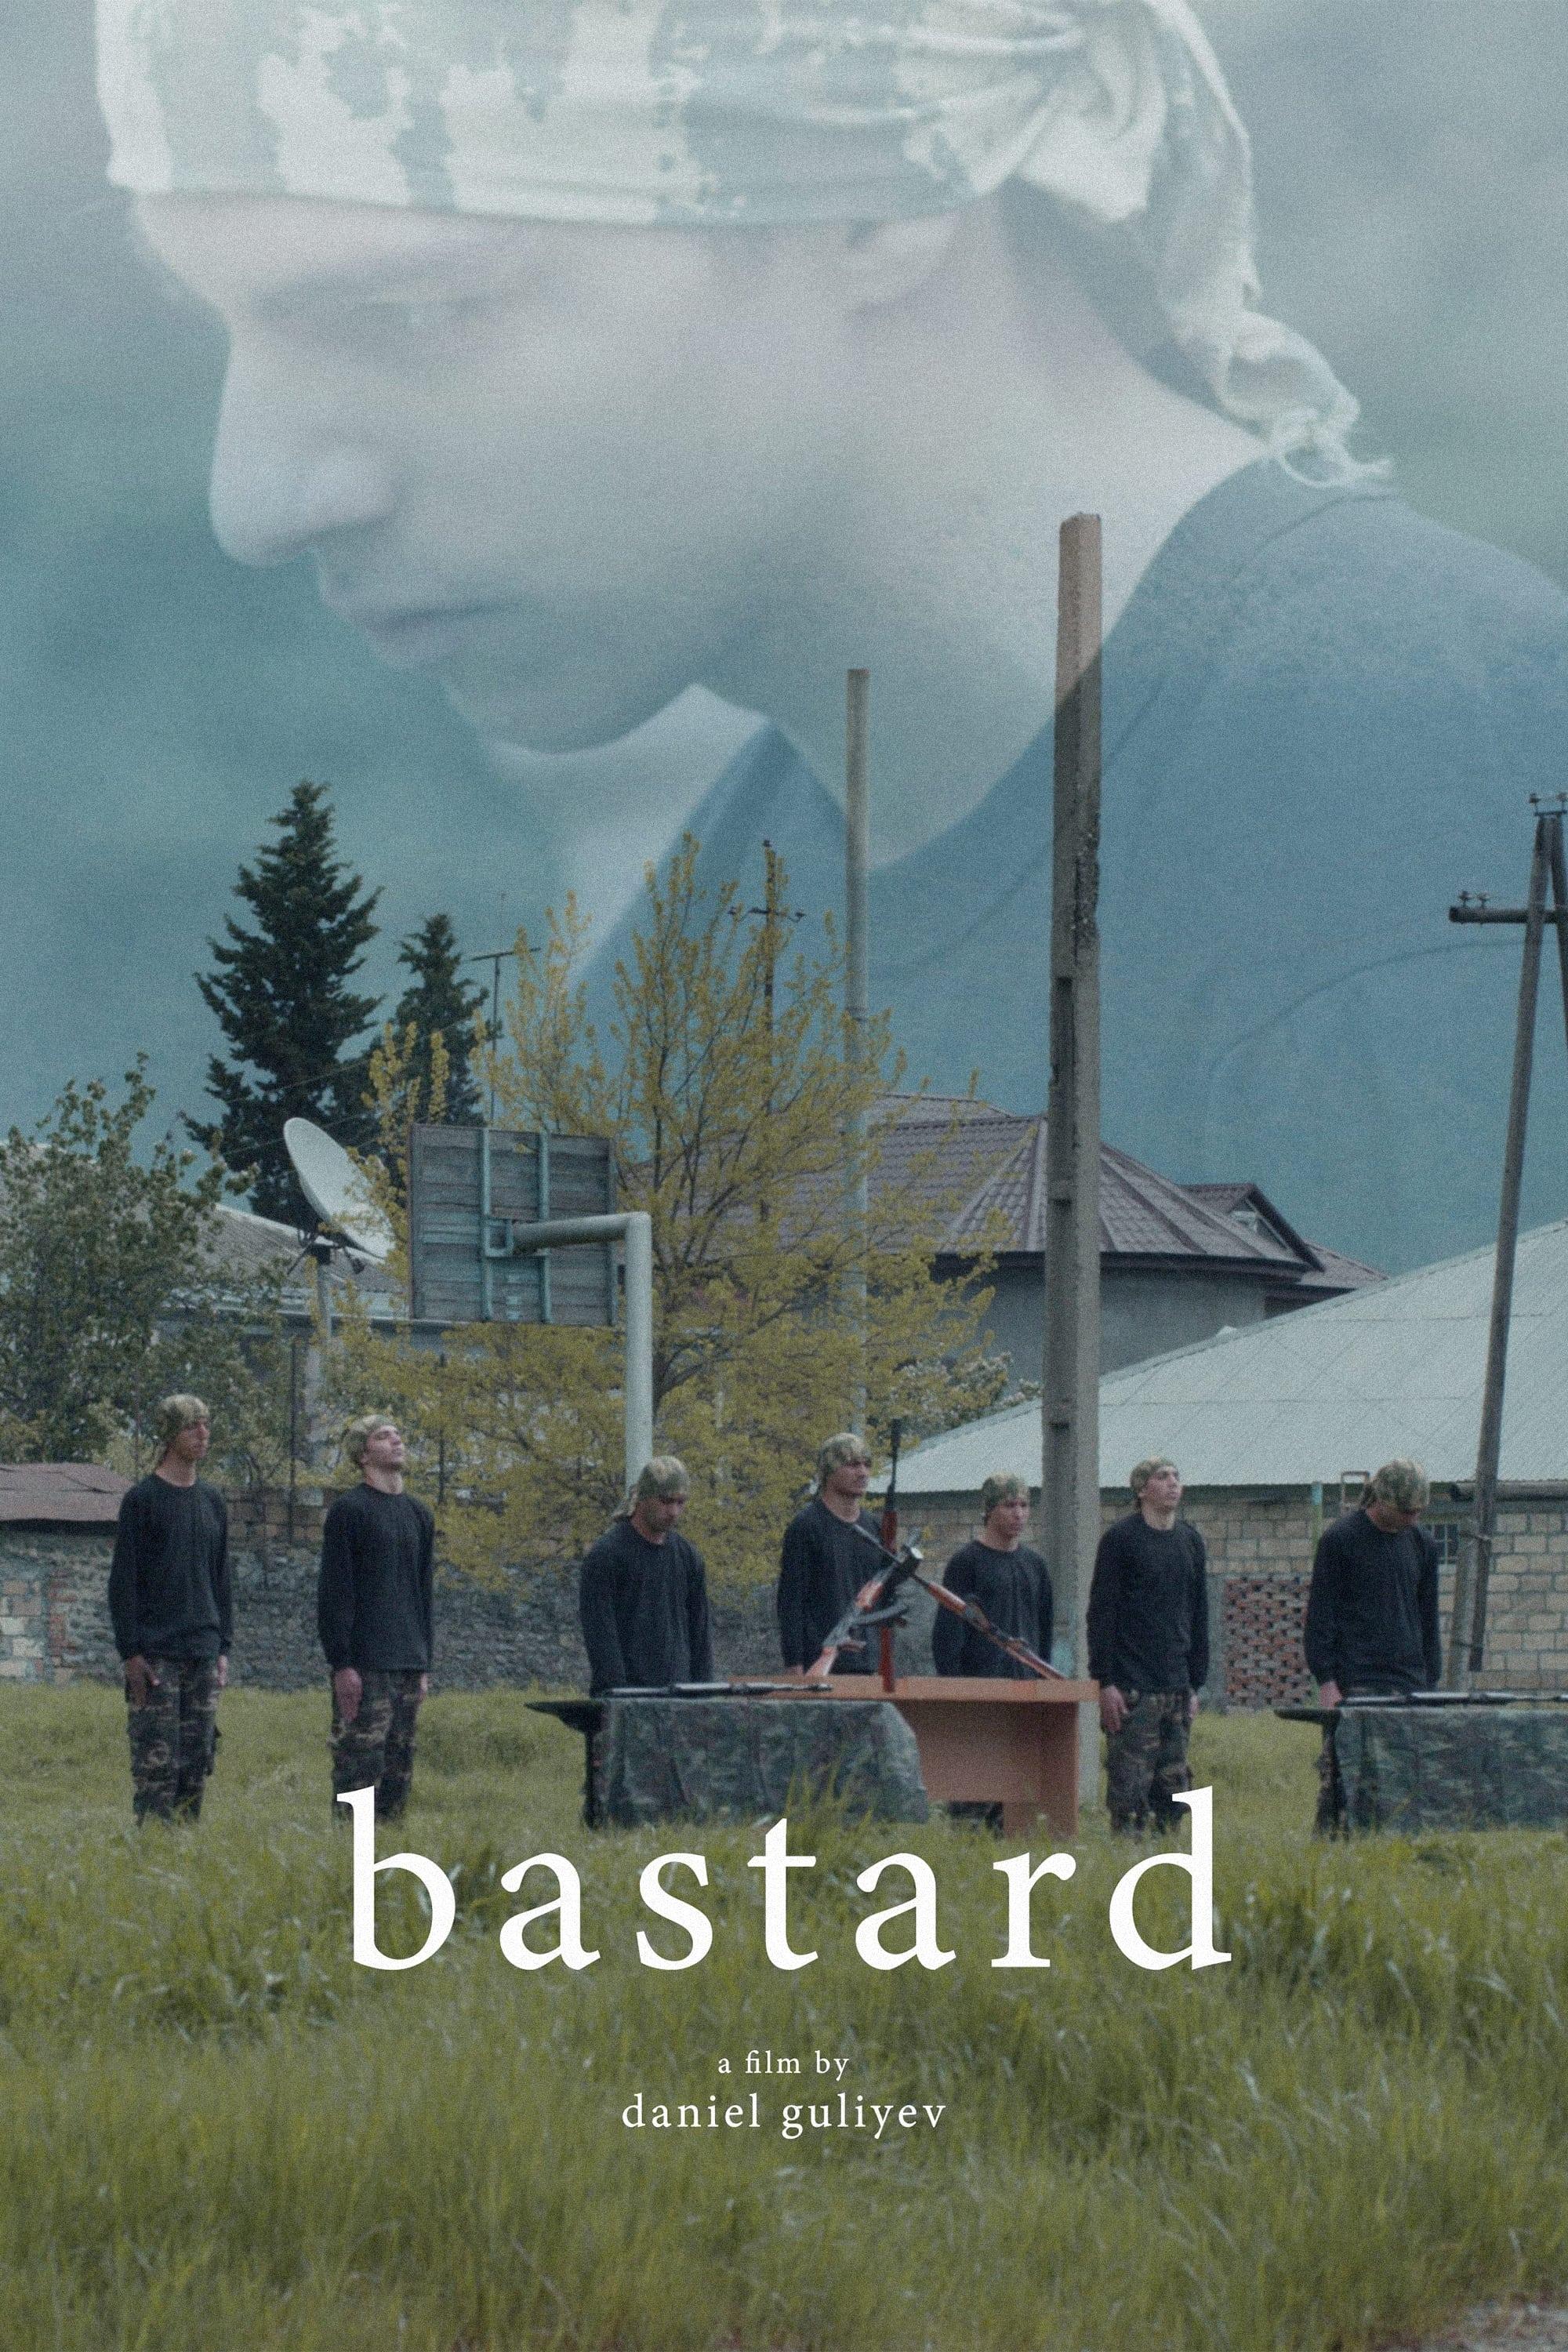 Bastard poster